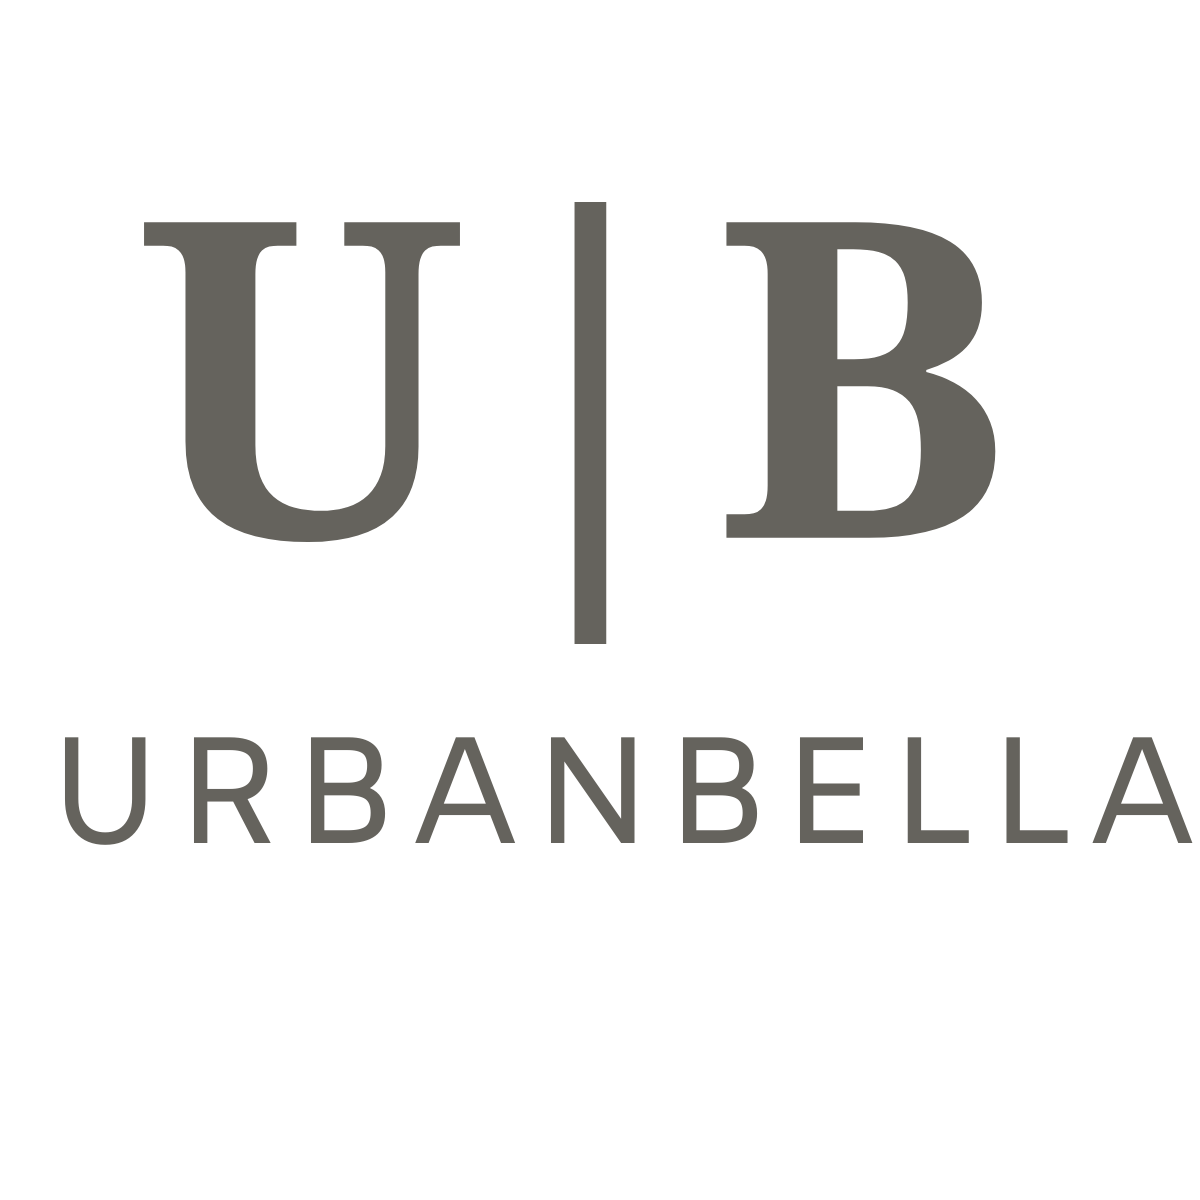 The 2022 Urbanbella Vault